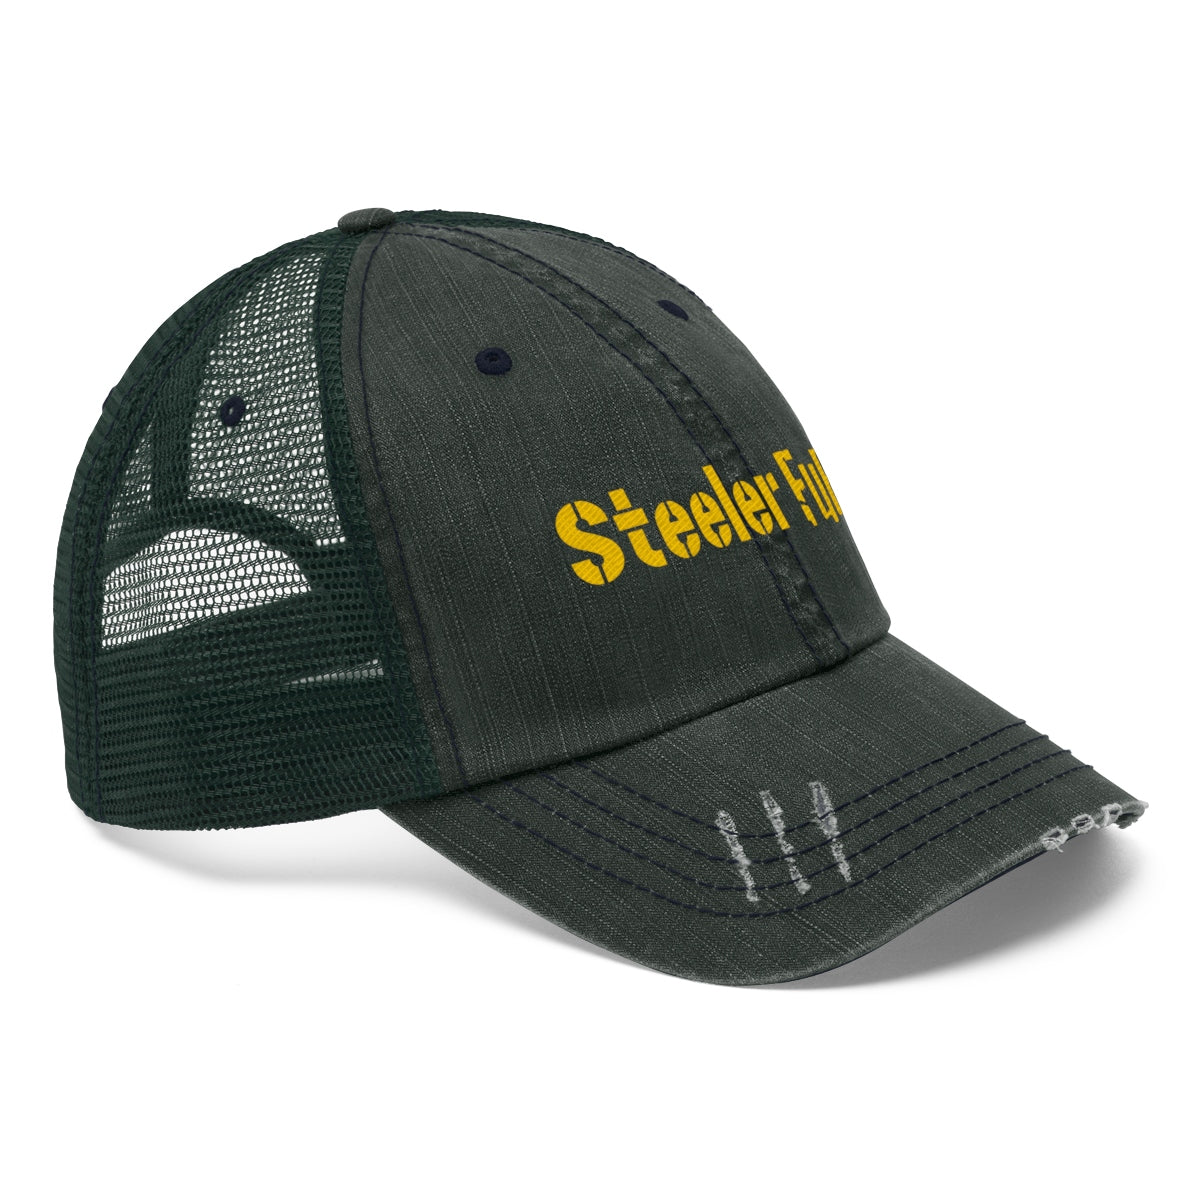 SteelerFury Unisex Trucker Hat